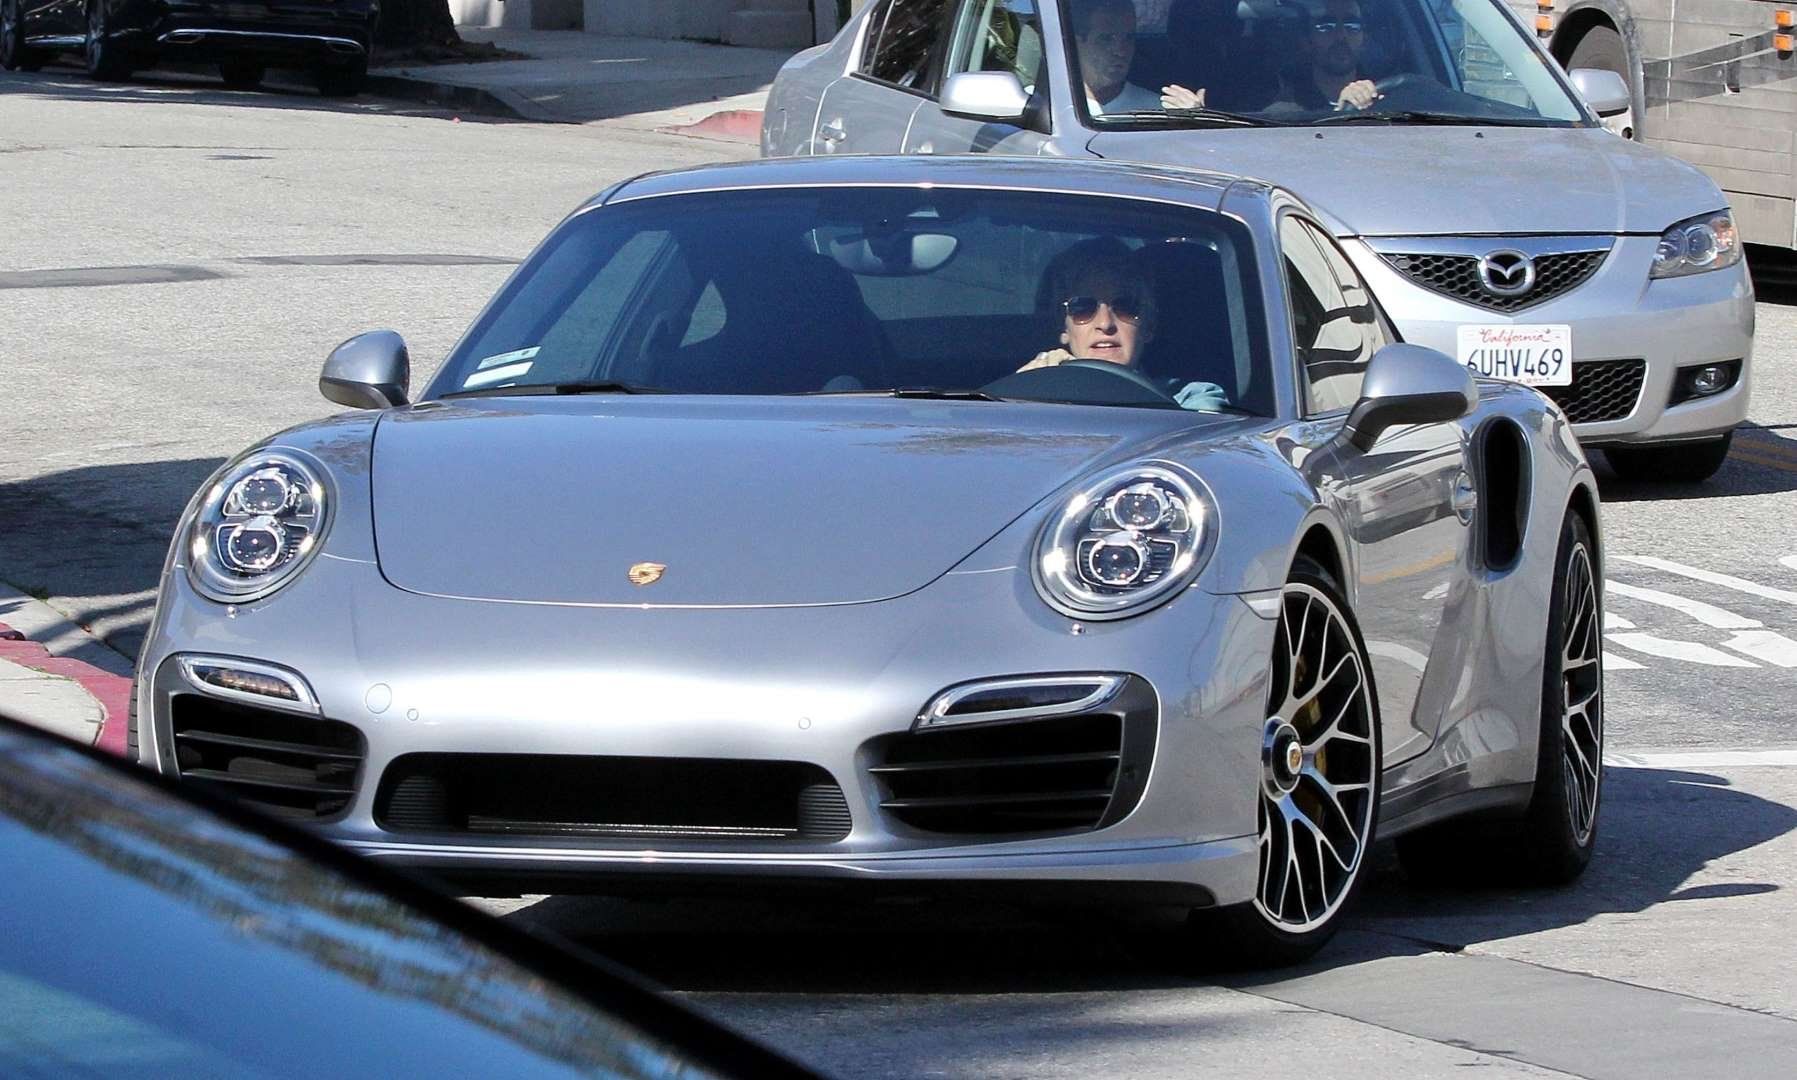 Ellen DeGeneres Drives a Porsche 911